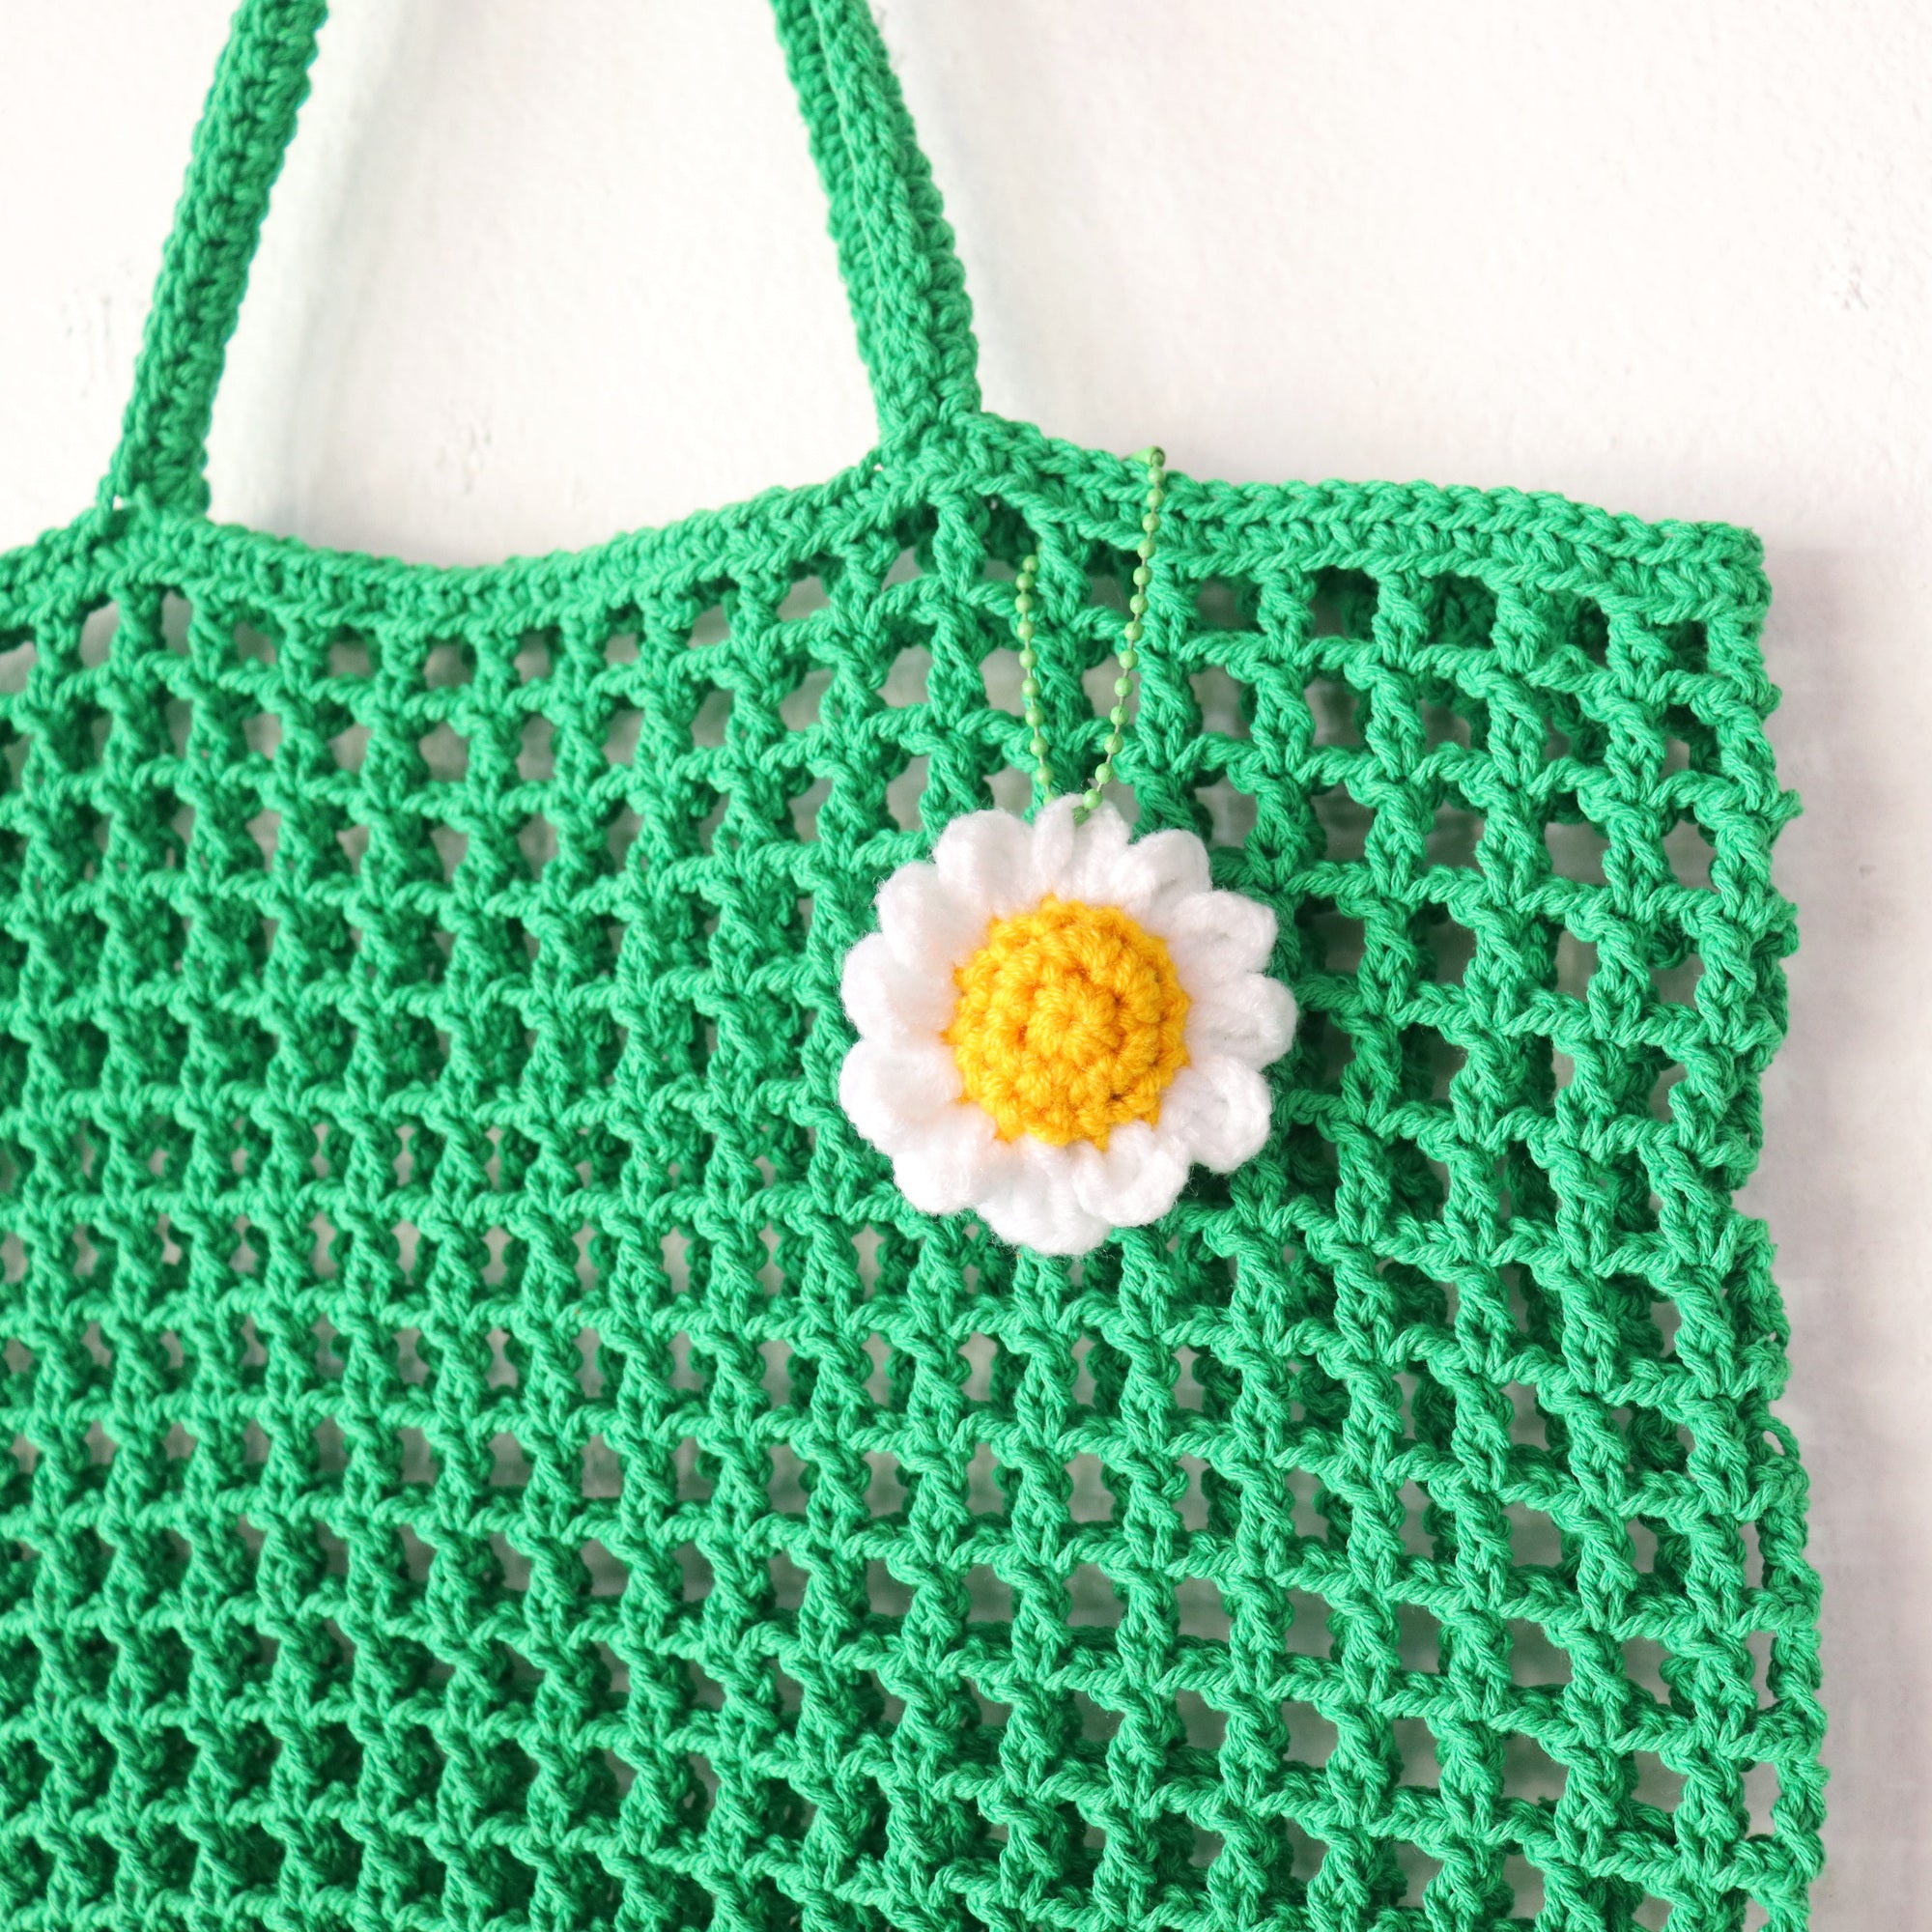 Green - Crochet Bag